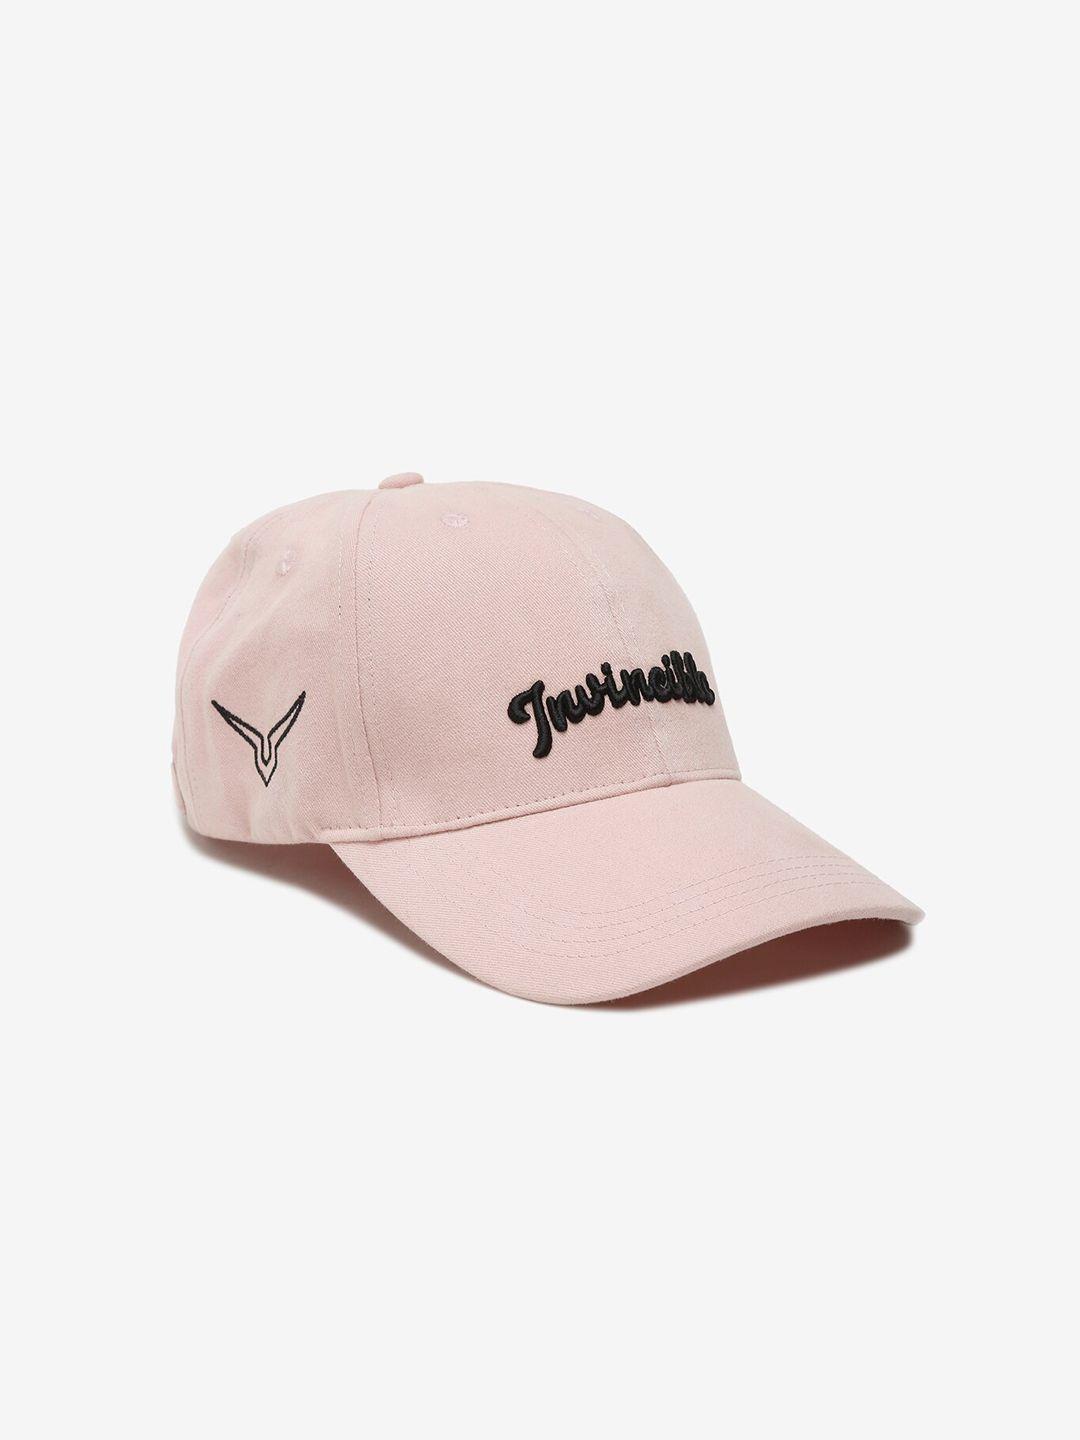 invincible unisex pink & black baseball cap